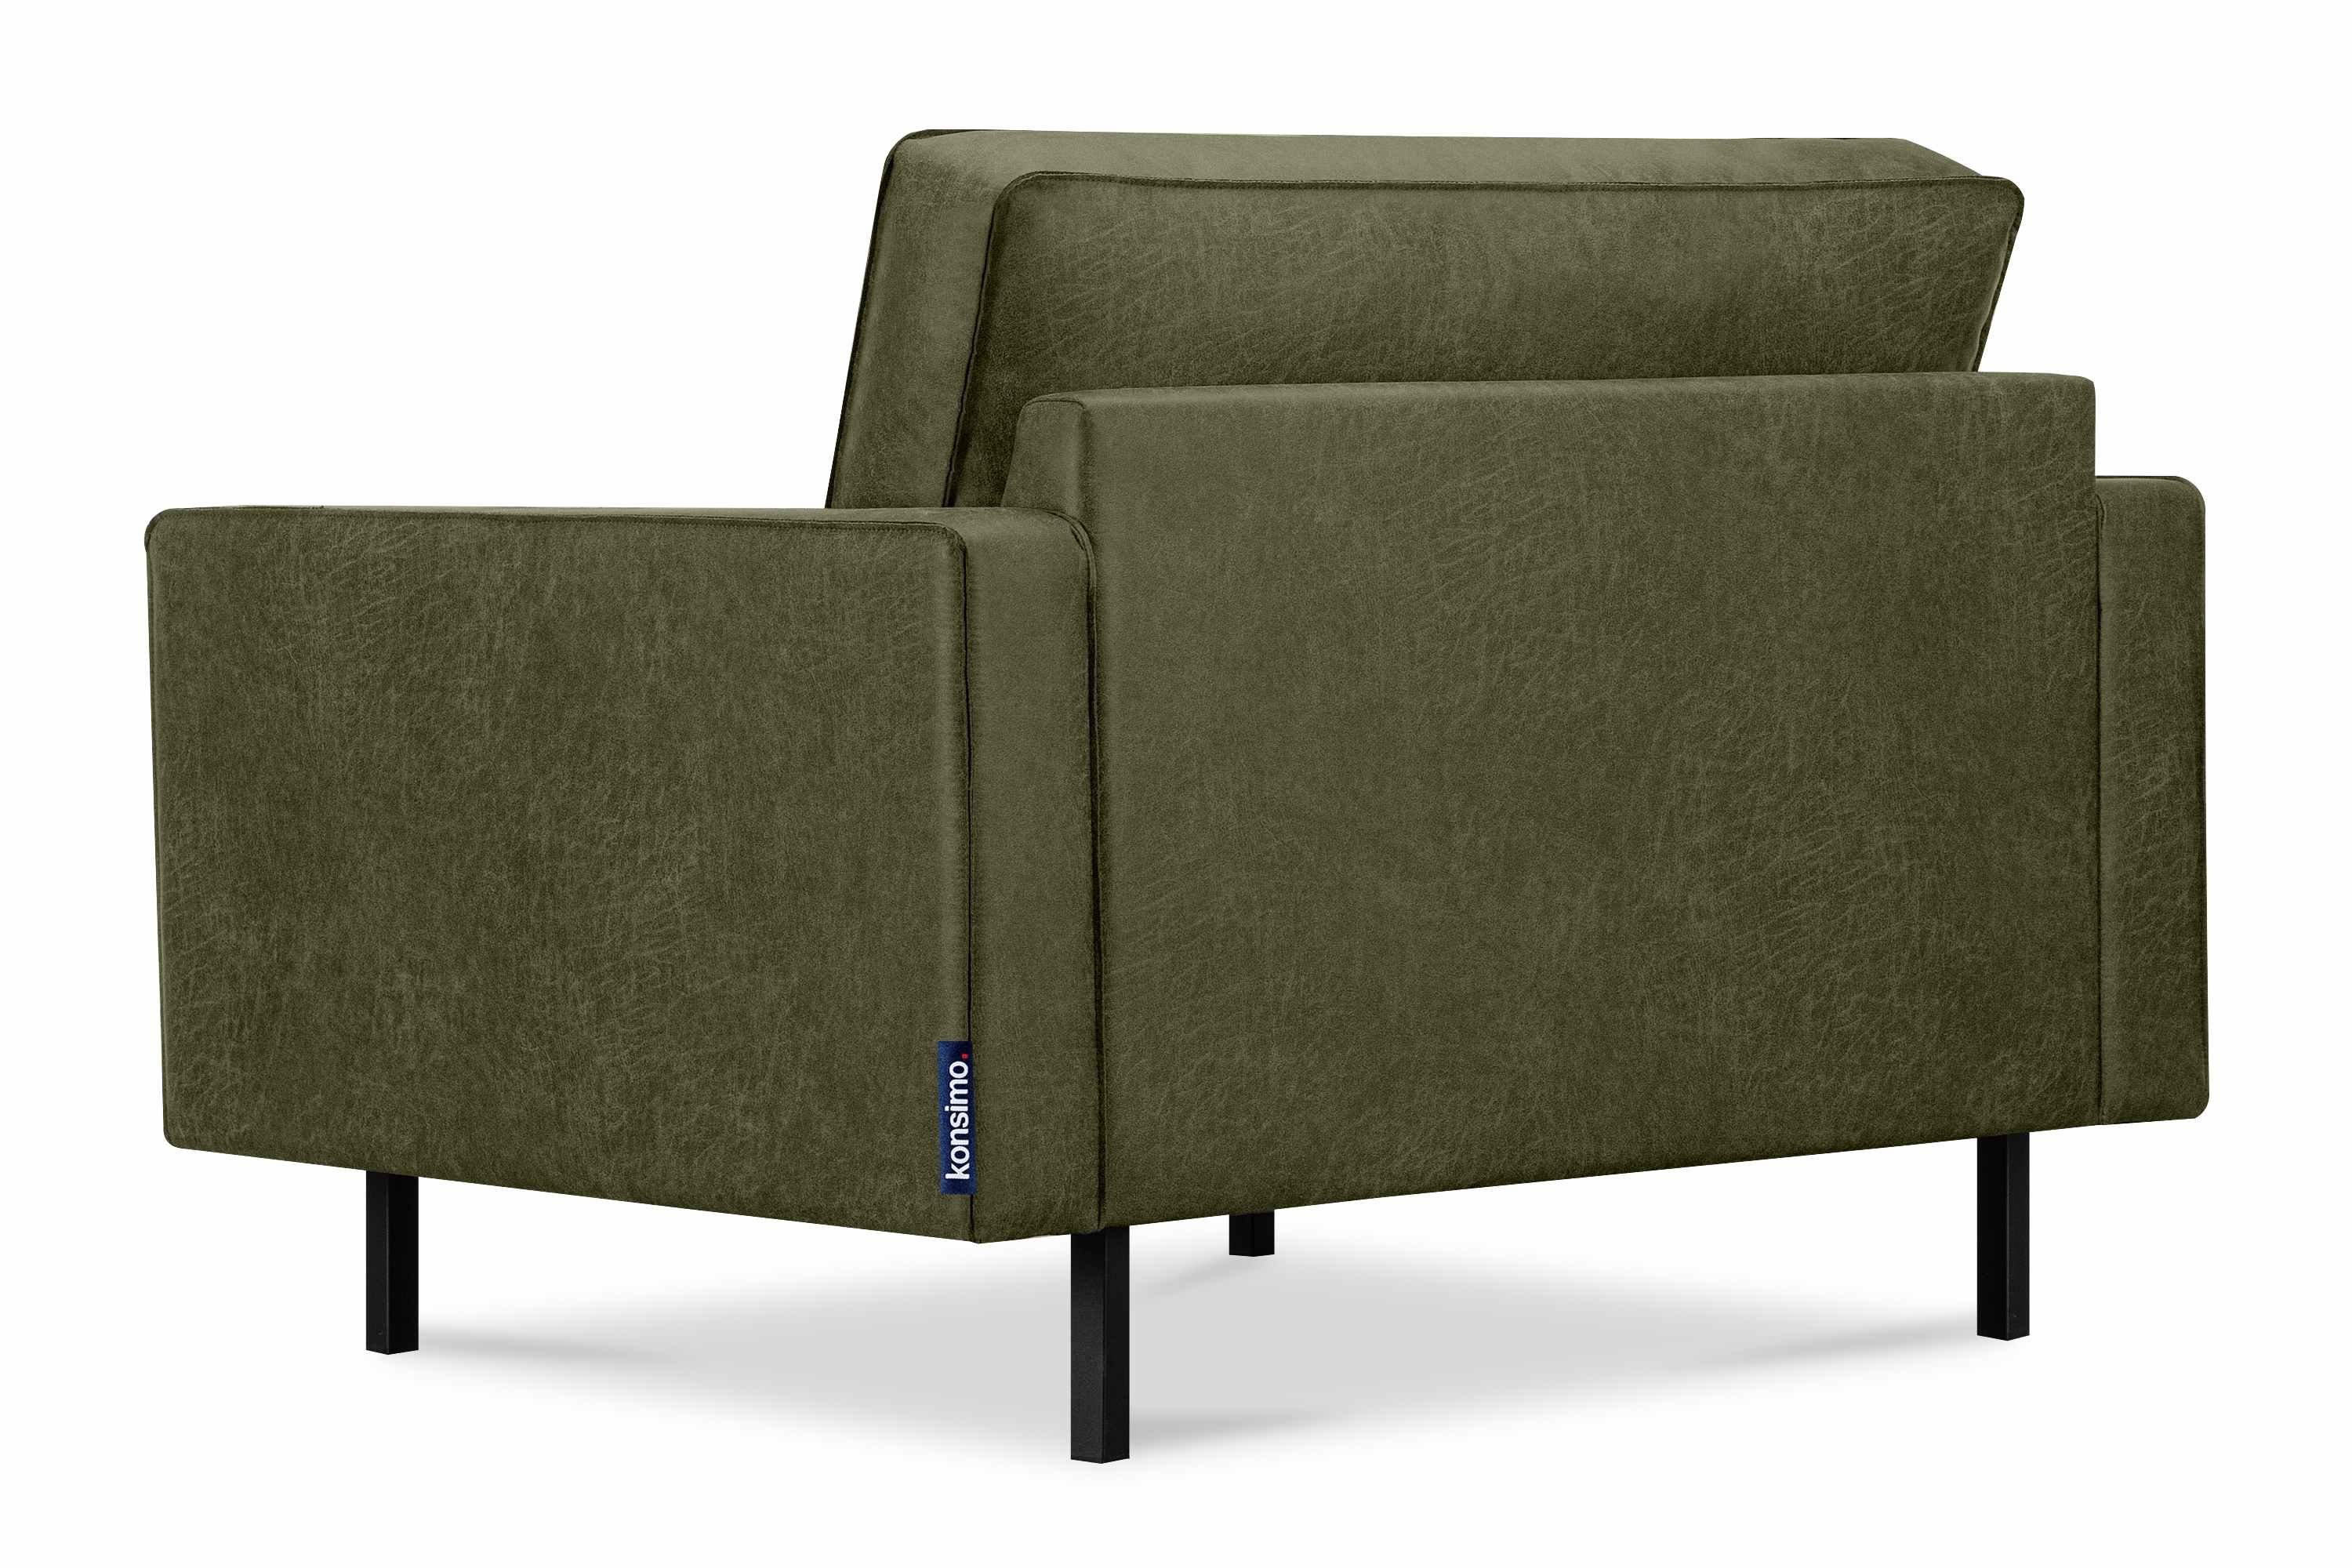 Grundschicht: Echtleder, grün Hergestellt Metallfüßen, INVIA Sessel grün | hohen in Sessel, Breite Konsimo auf grün | EU